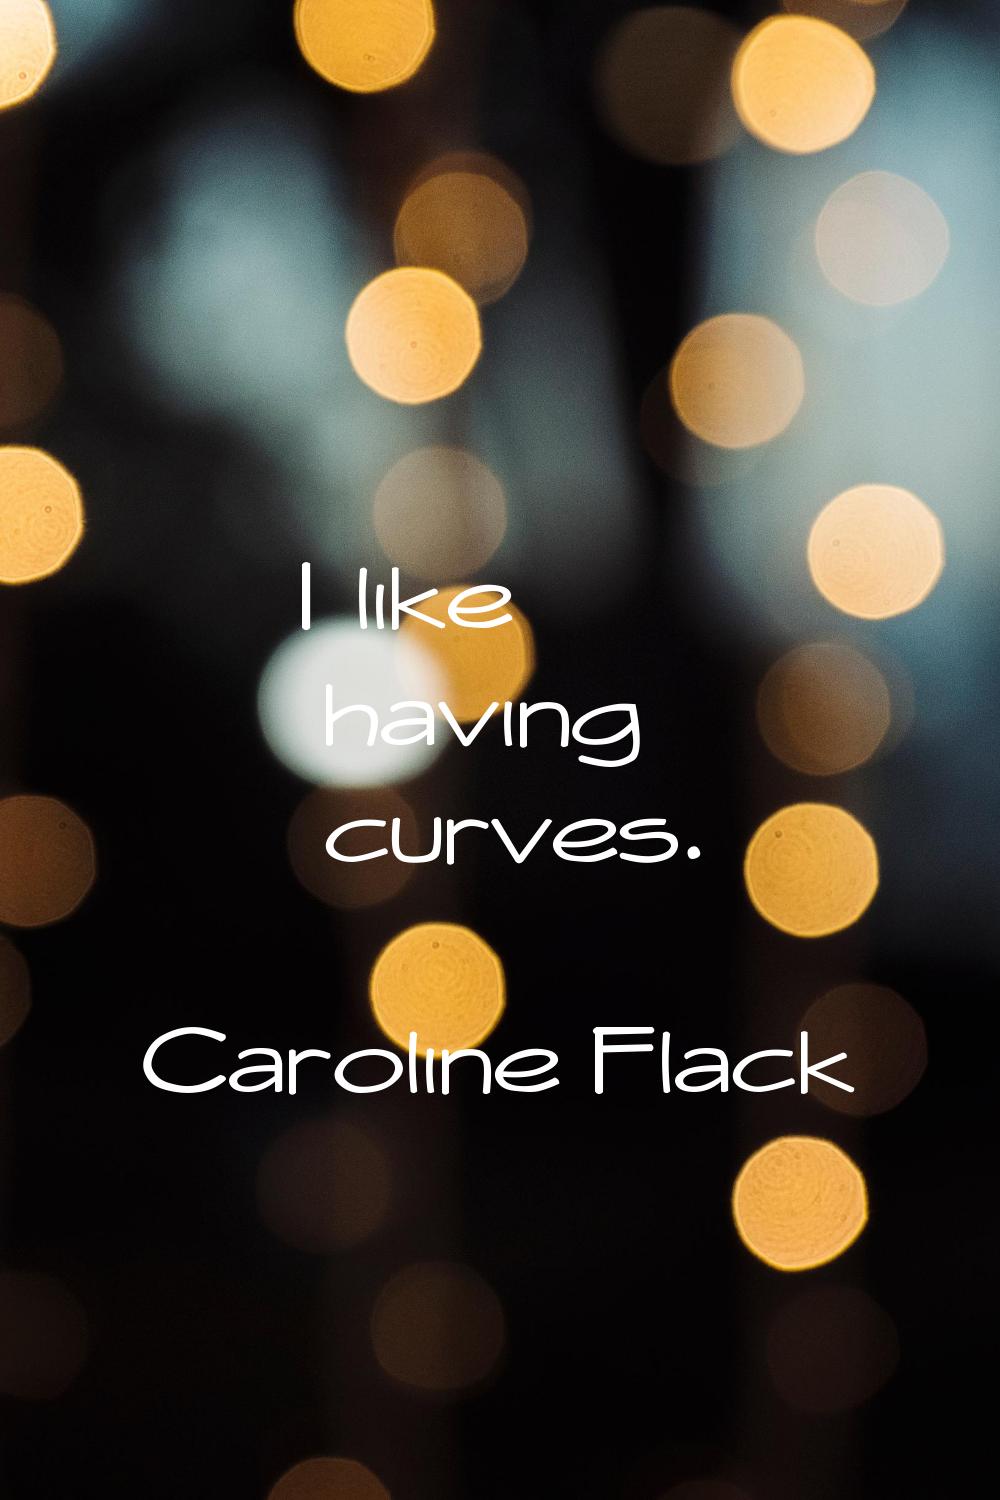 I like having curves.